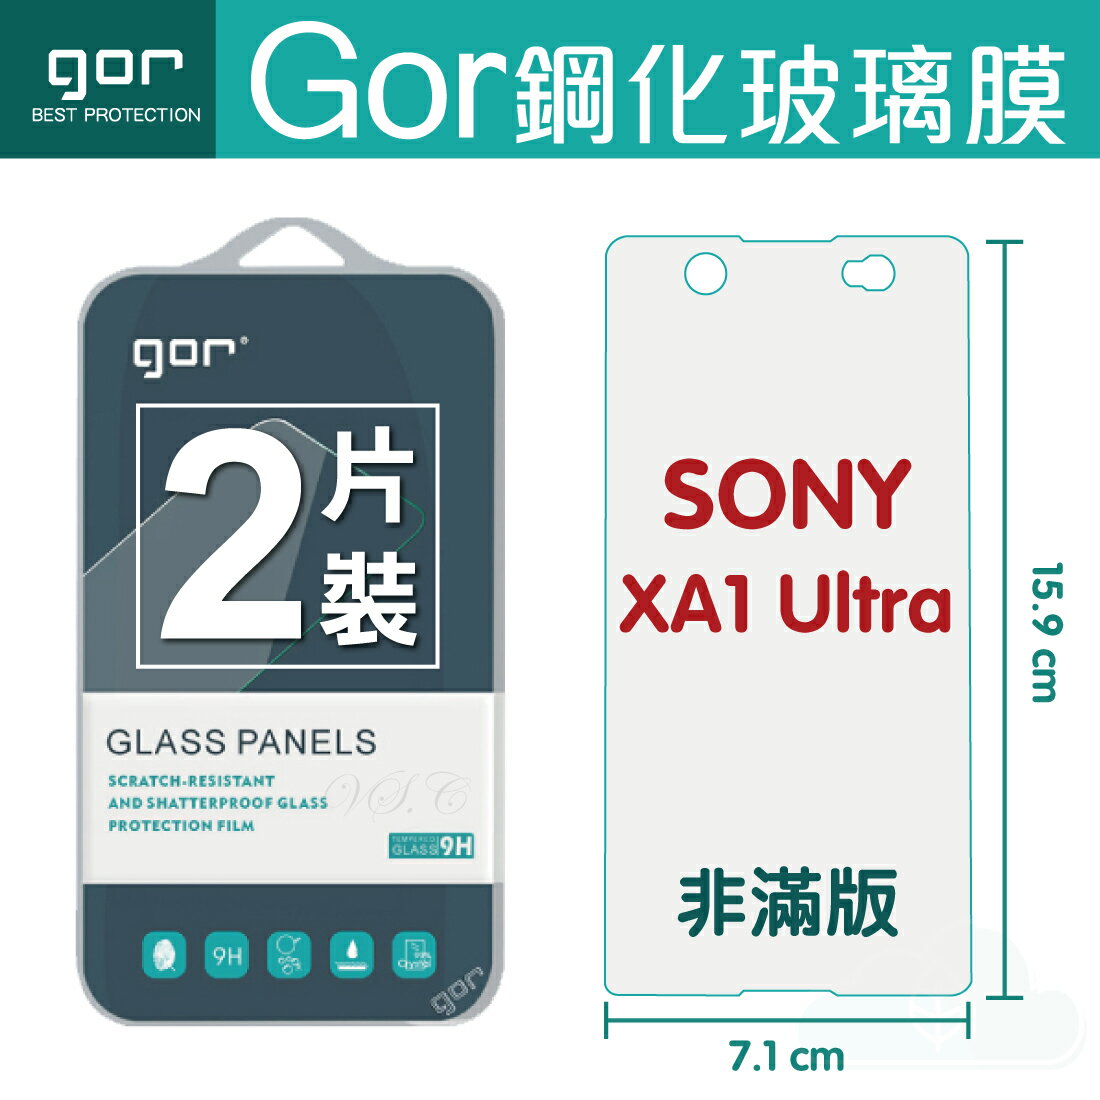 【SONY】GOR 9H SONY Xperia XA1 Ultra 鋼化 玻璃 保護貼 全透明非滿版 兩片裝【全館滿299免運費】